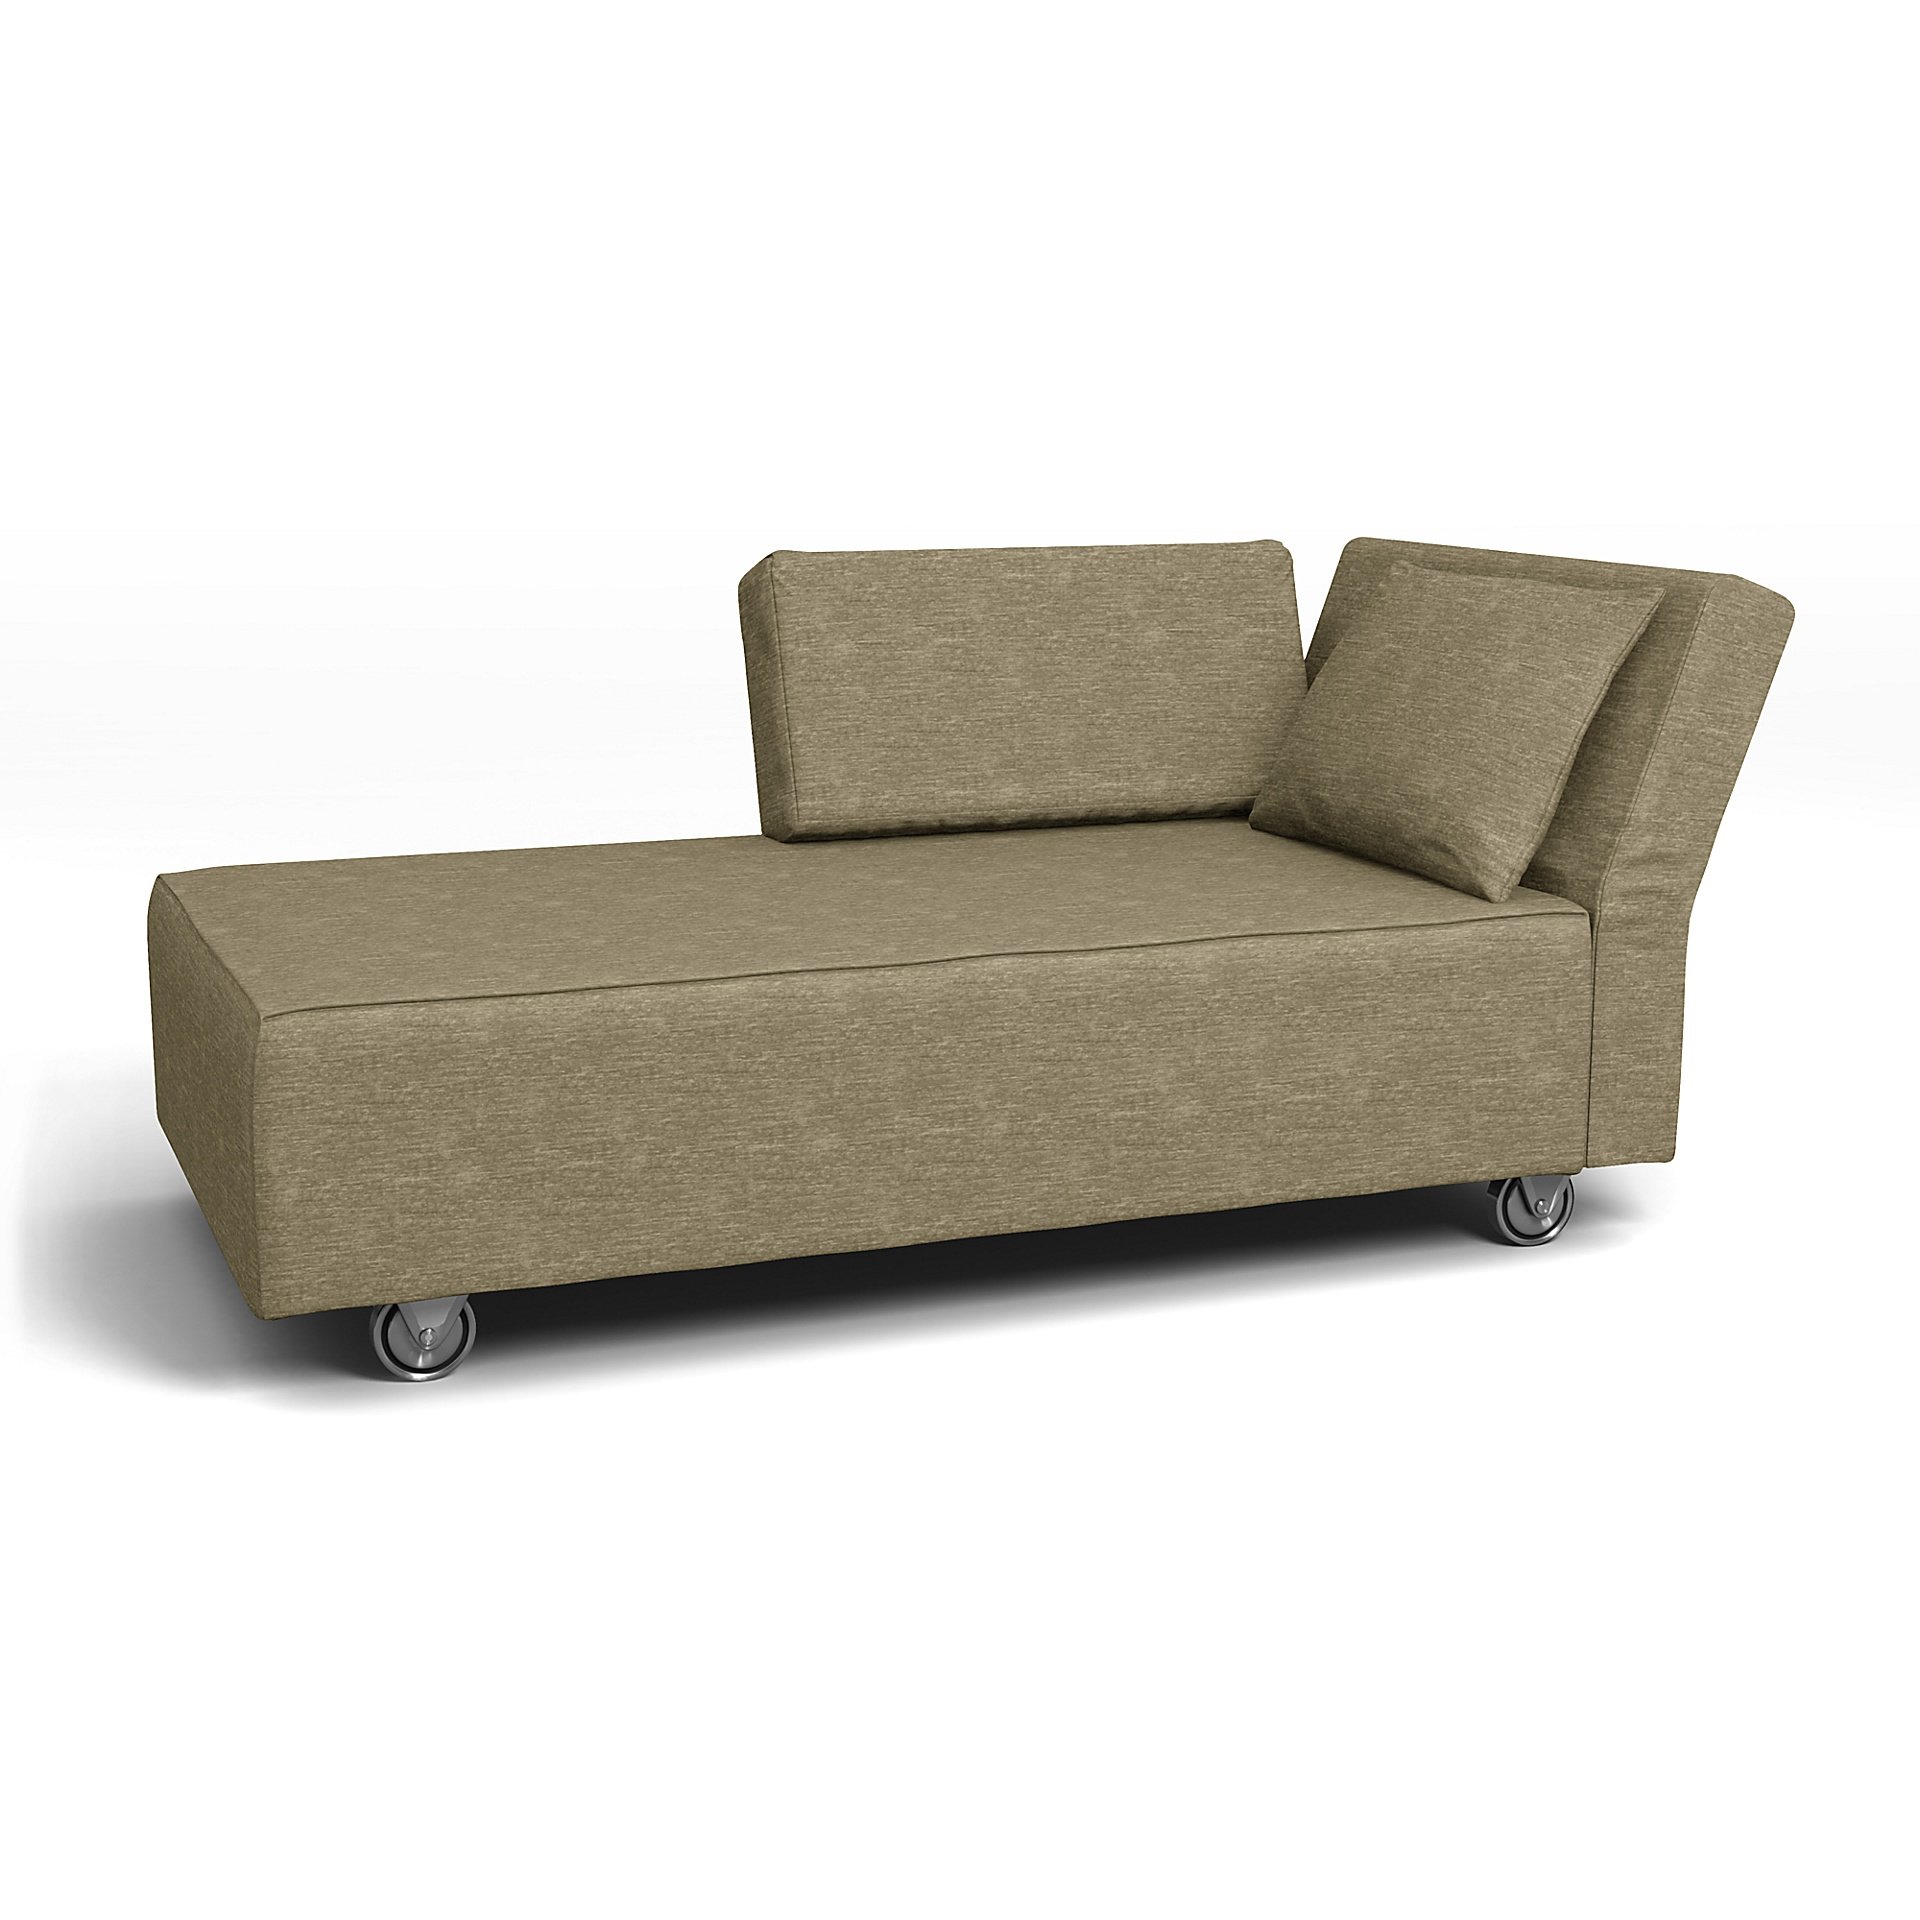 IKEA - Falsterbo Chaise with Right Armrest Cover, Beige, Velvet - Bemz